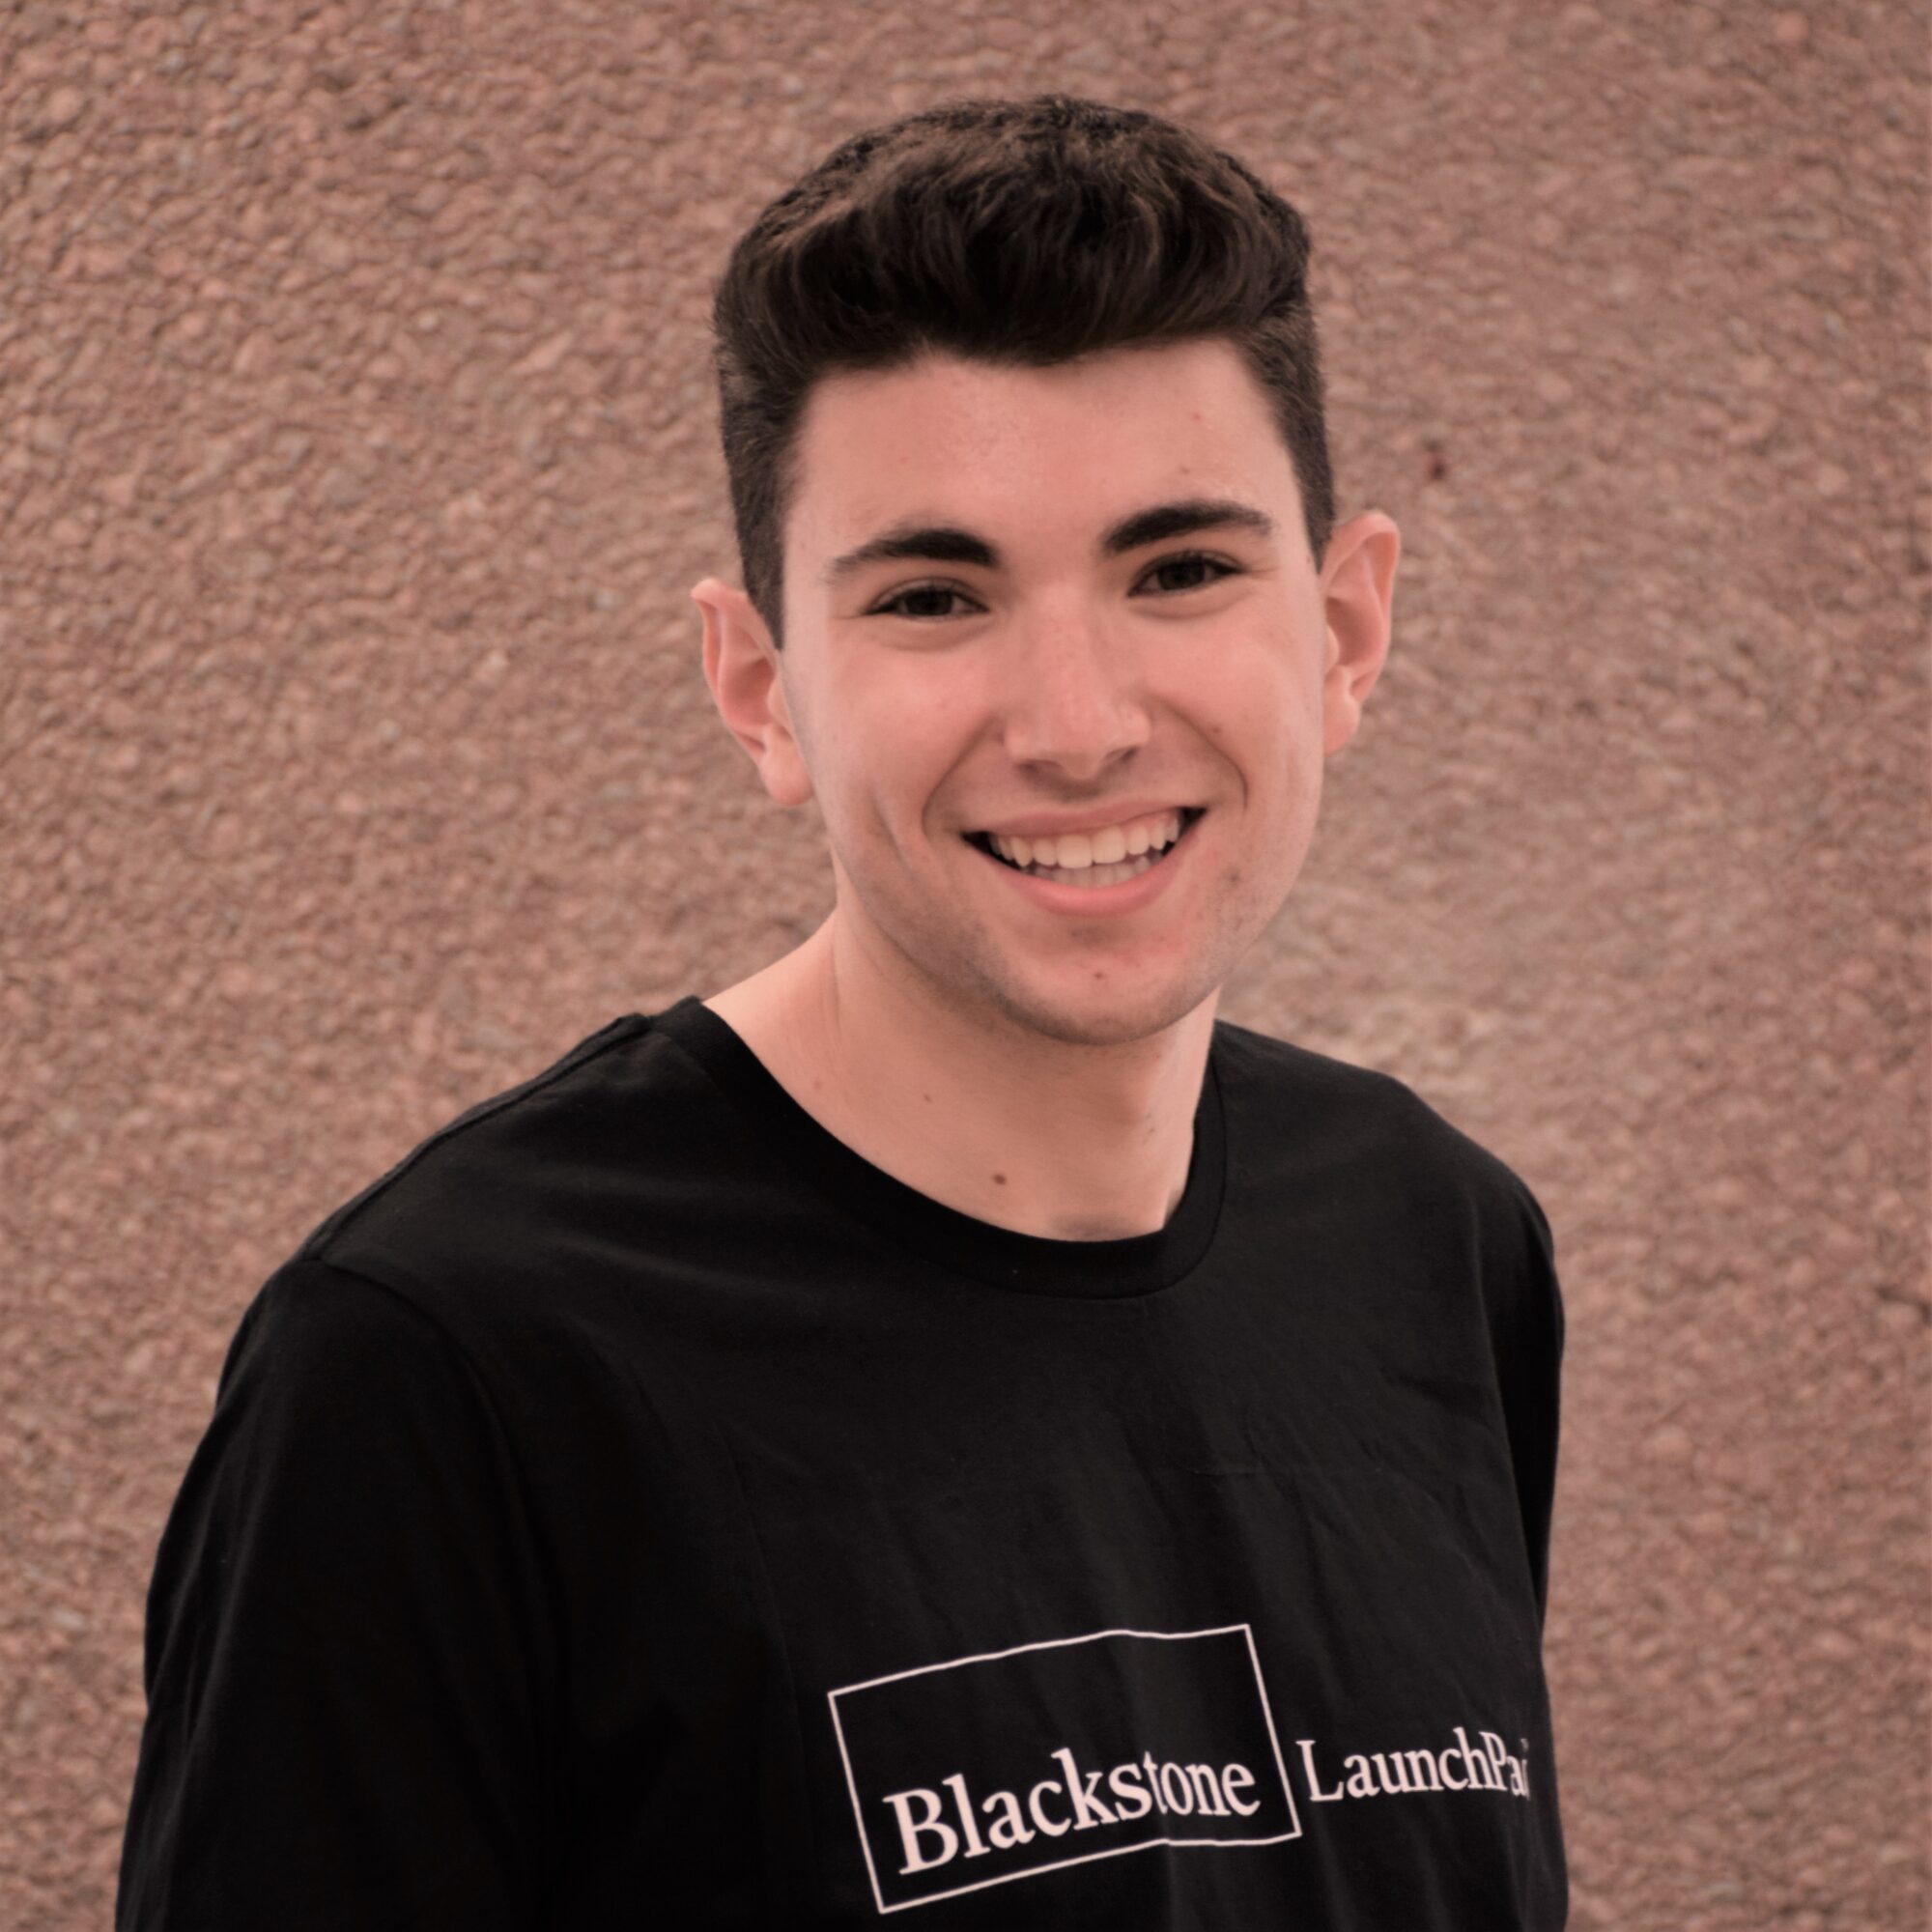 headshot of a man in a Blackstone LaunchPad shirt